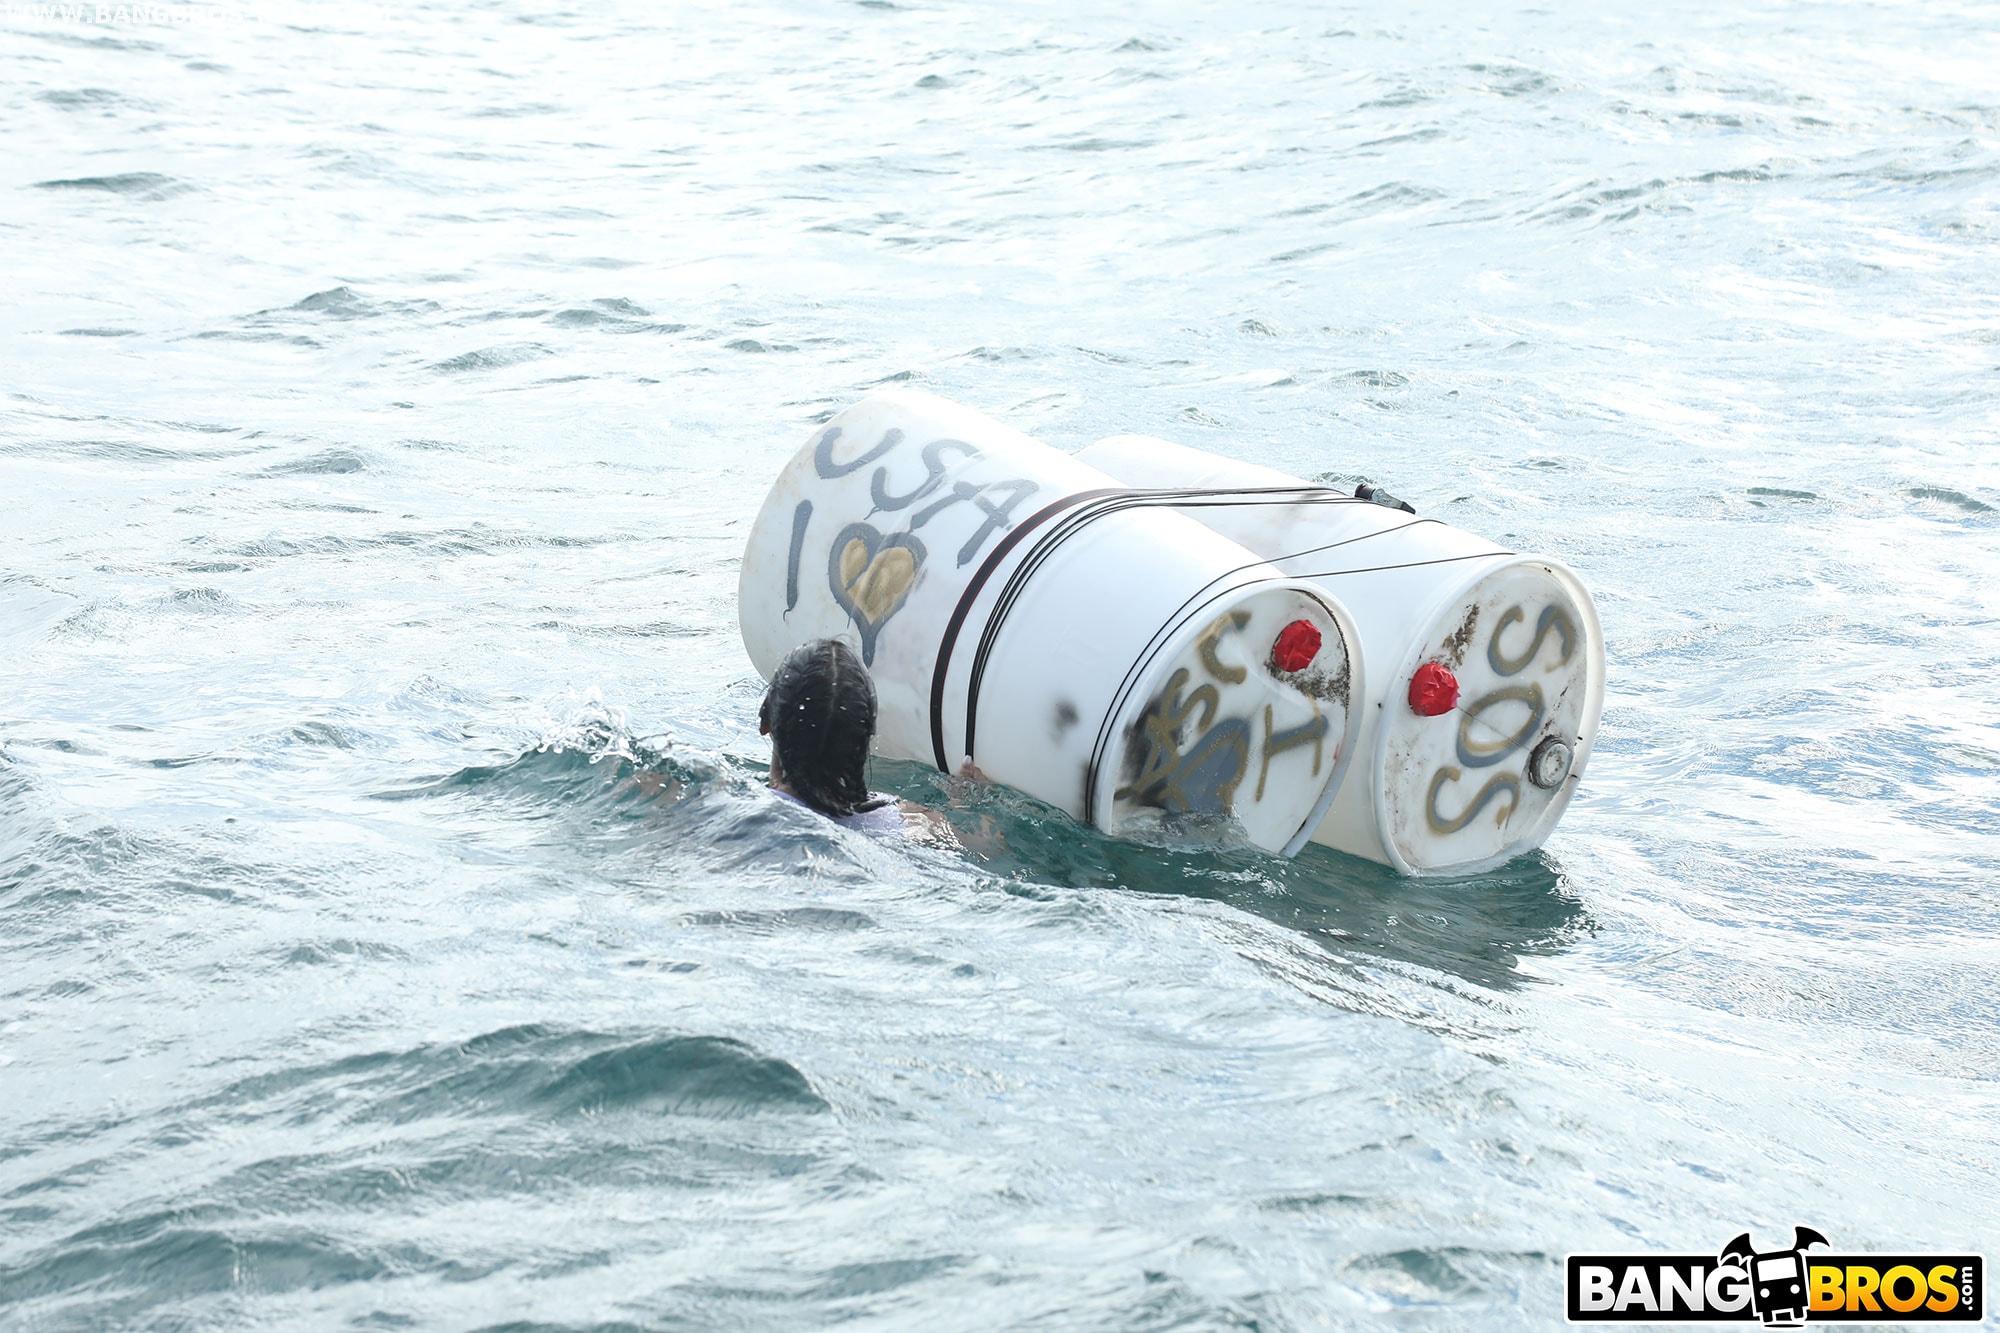 Bangbros 'Cuban Hottie Gets Rescued at Sea' starring Vanessa Sky (Photo 72)